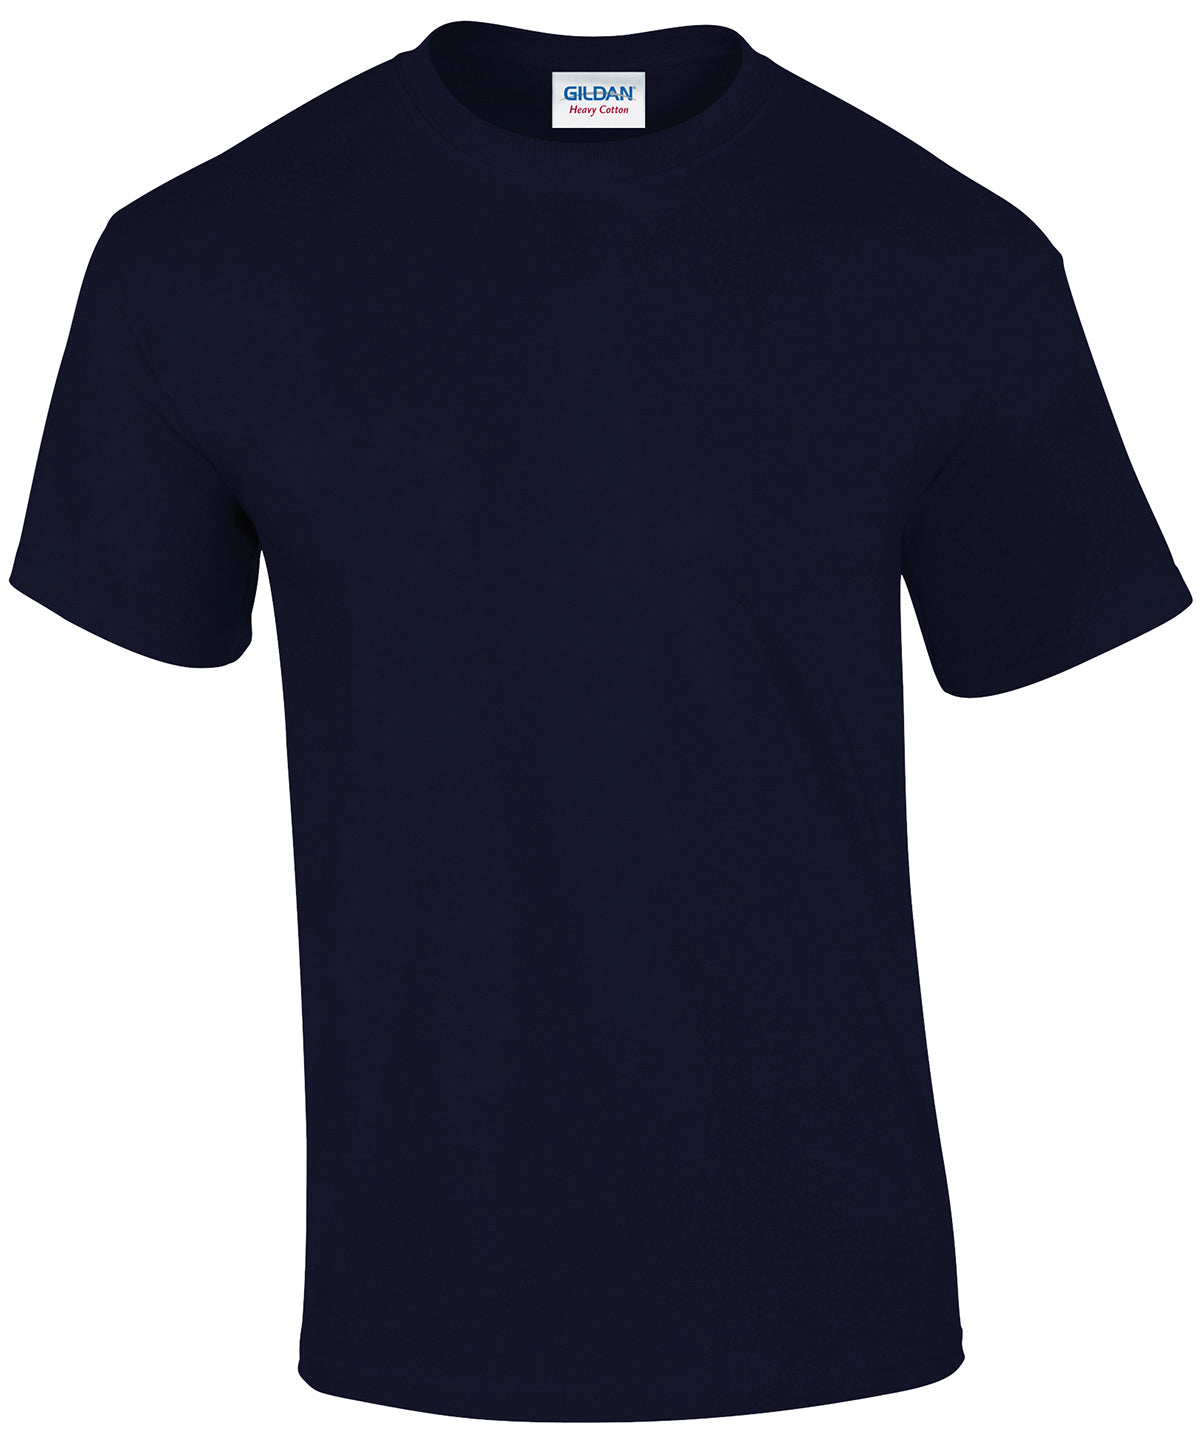 Personalised T-Shirts - Natural Gildan Heavy Cotton™ adult t-shirt